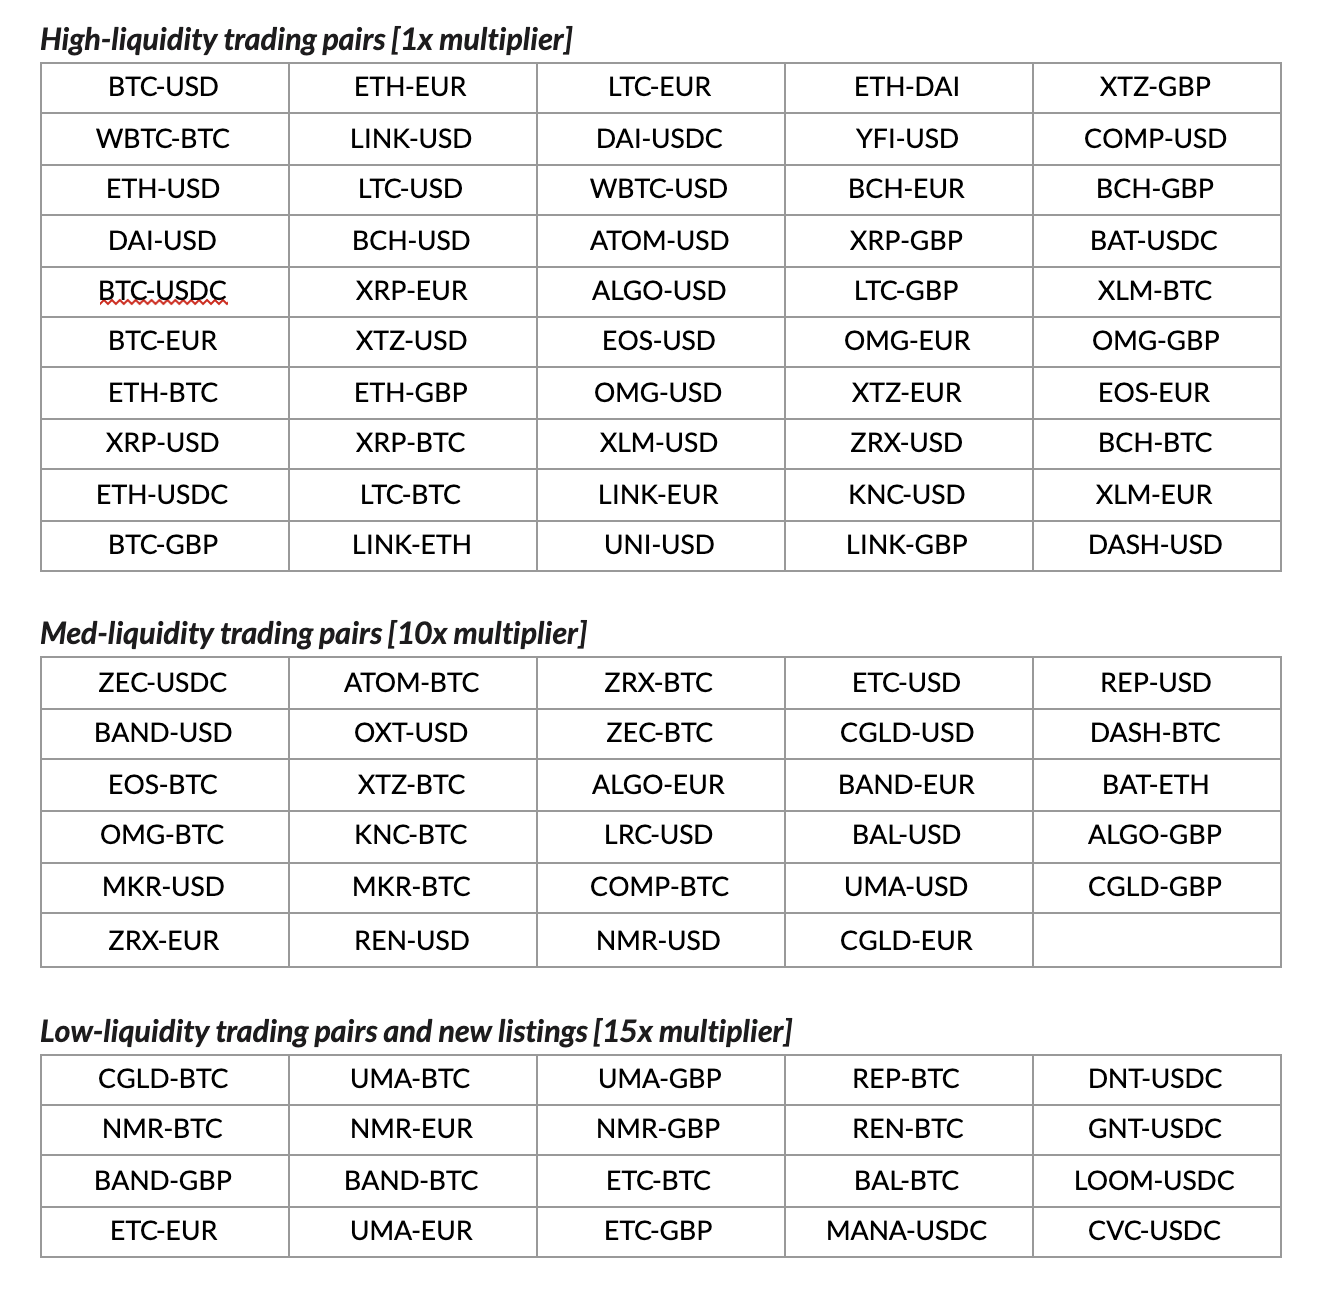 Med-liquidity trading pairs